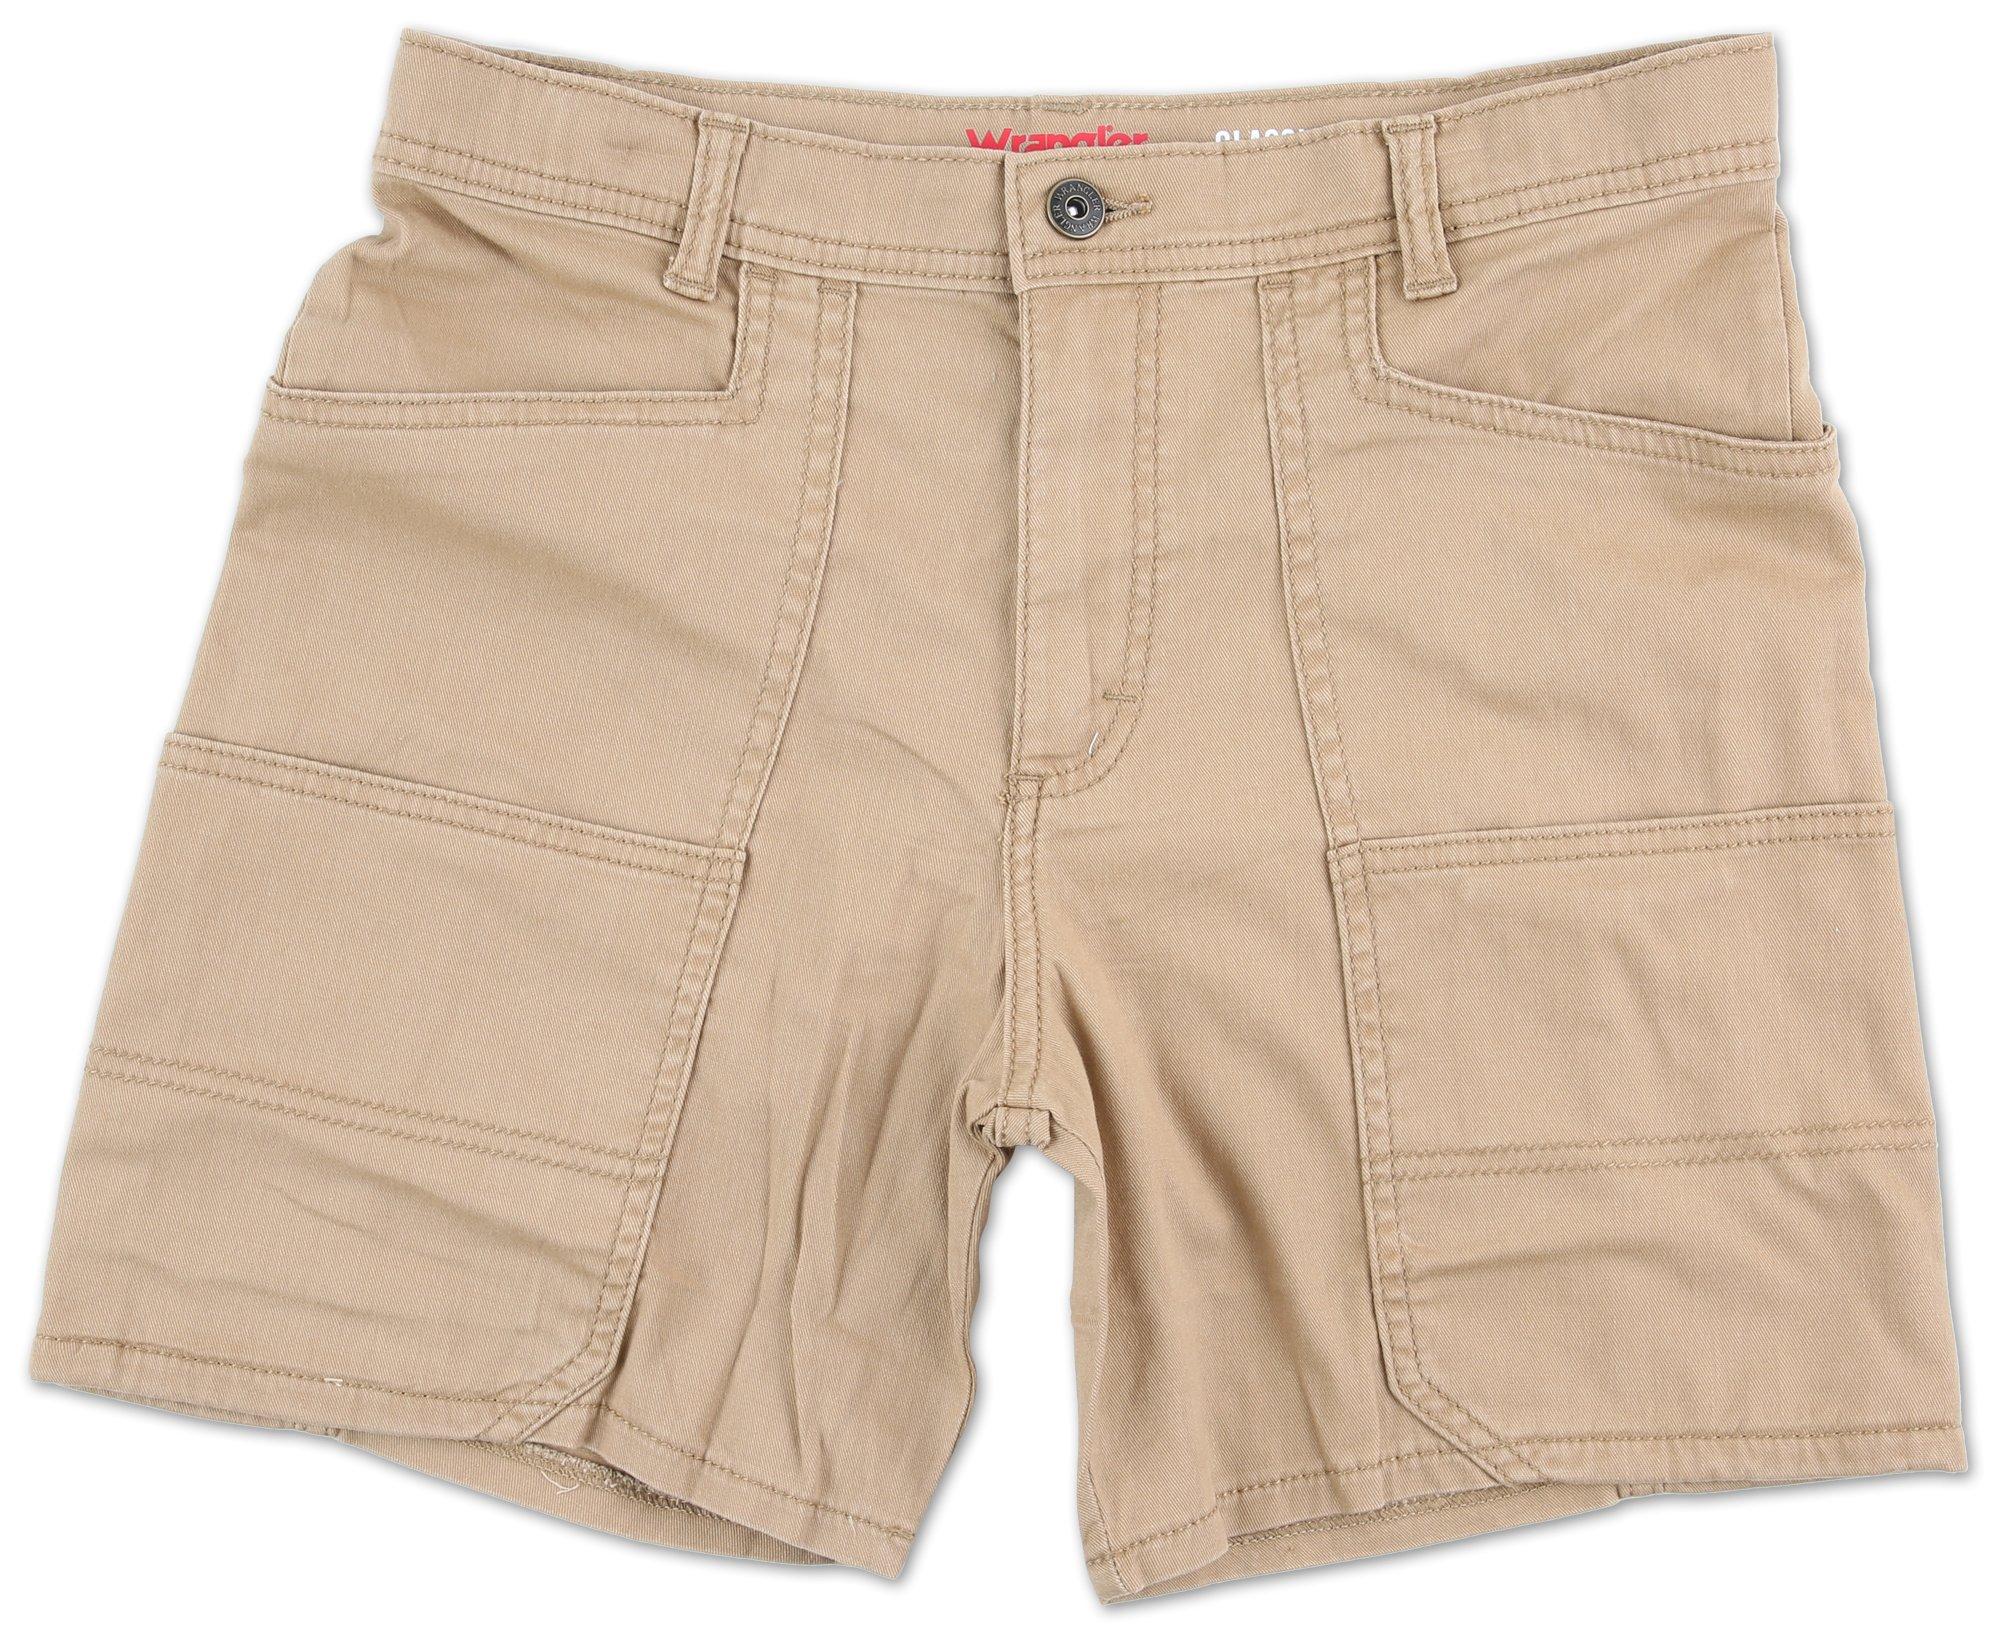 Boys Solid Cargo Shorts